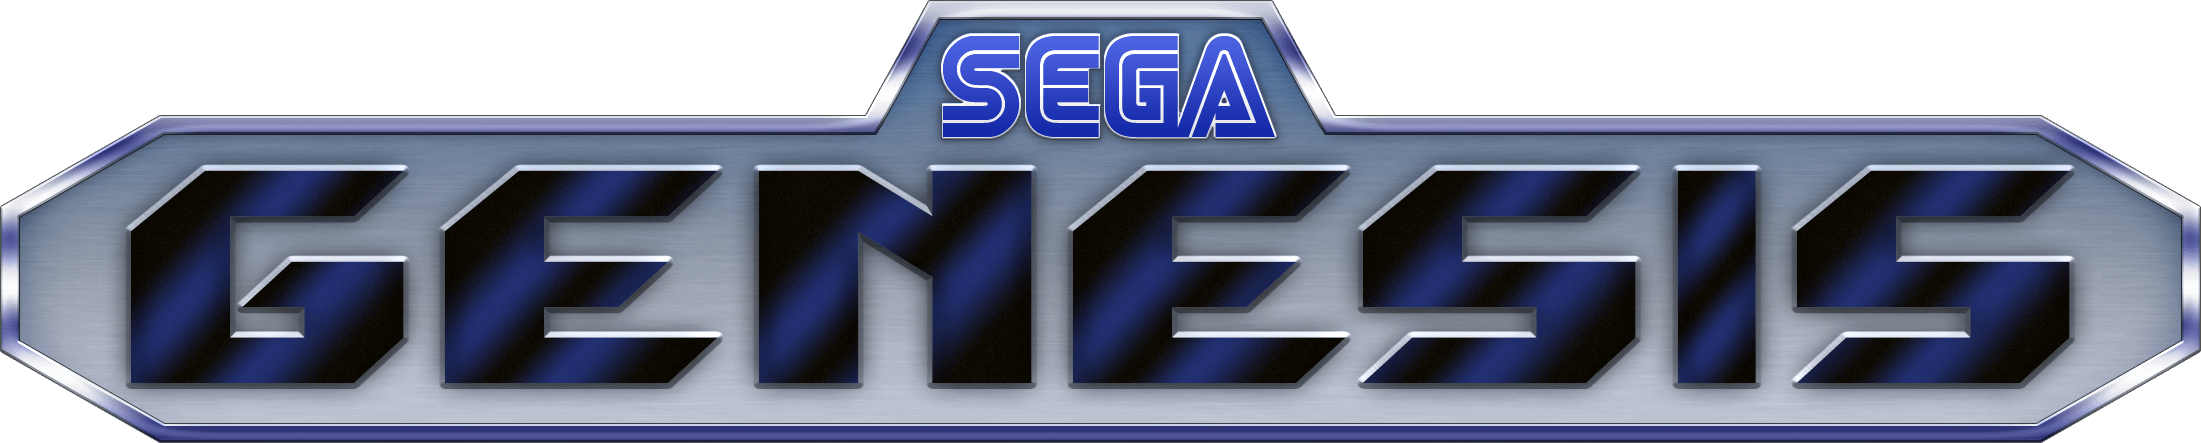 Sega Genesis Logo - Sega Genesis Logo by BLUEamnesiac on DeviantArt